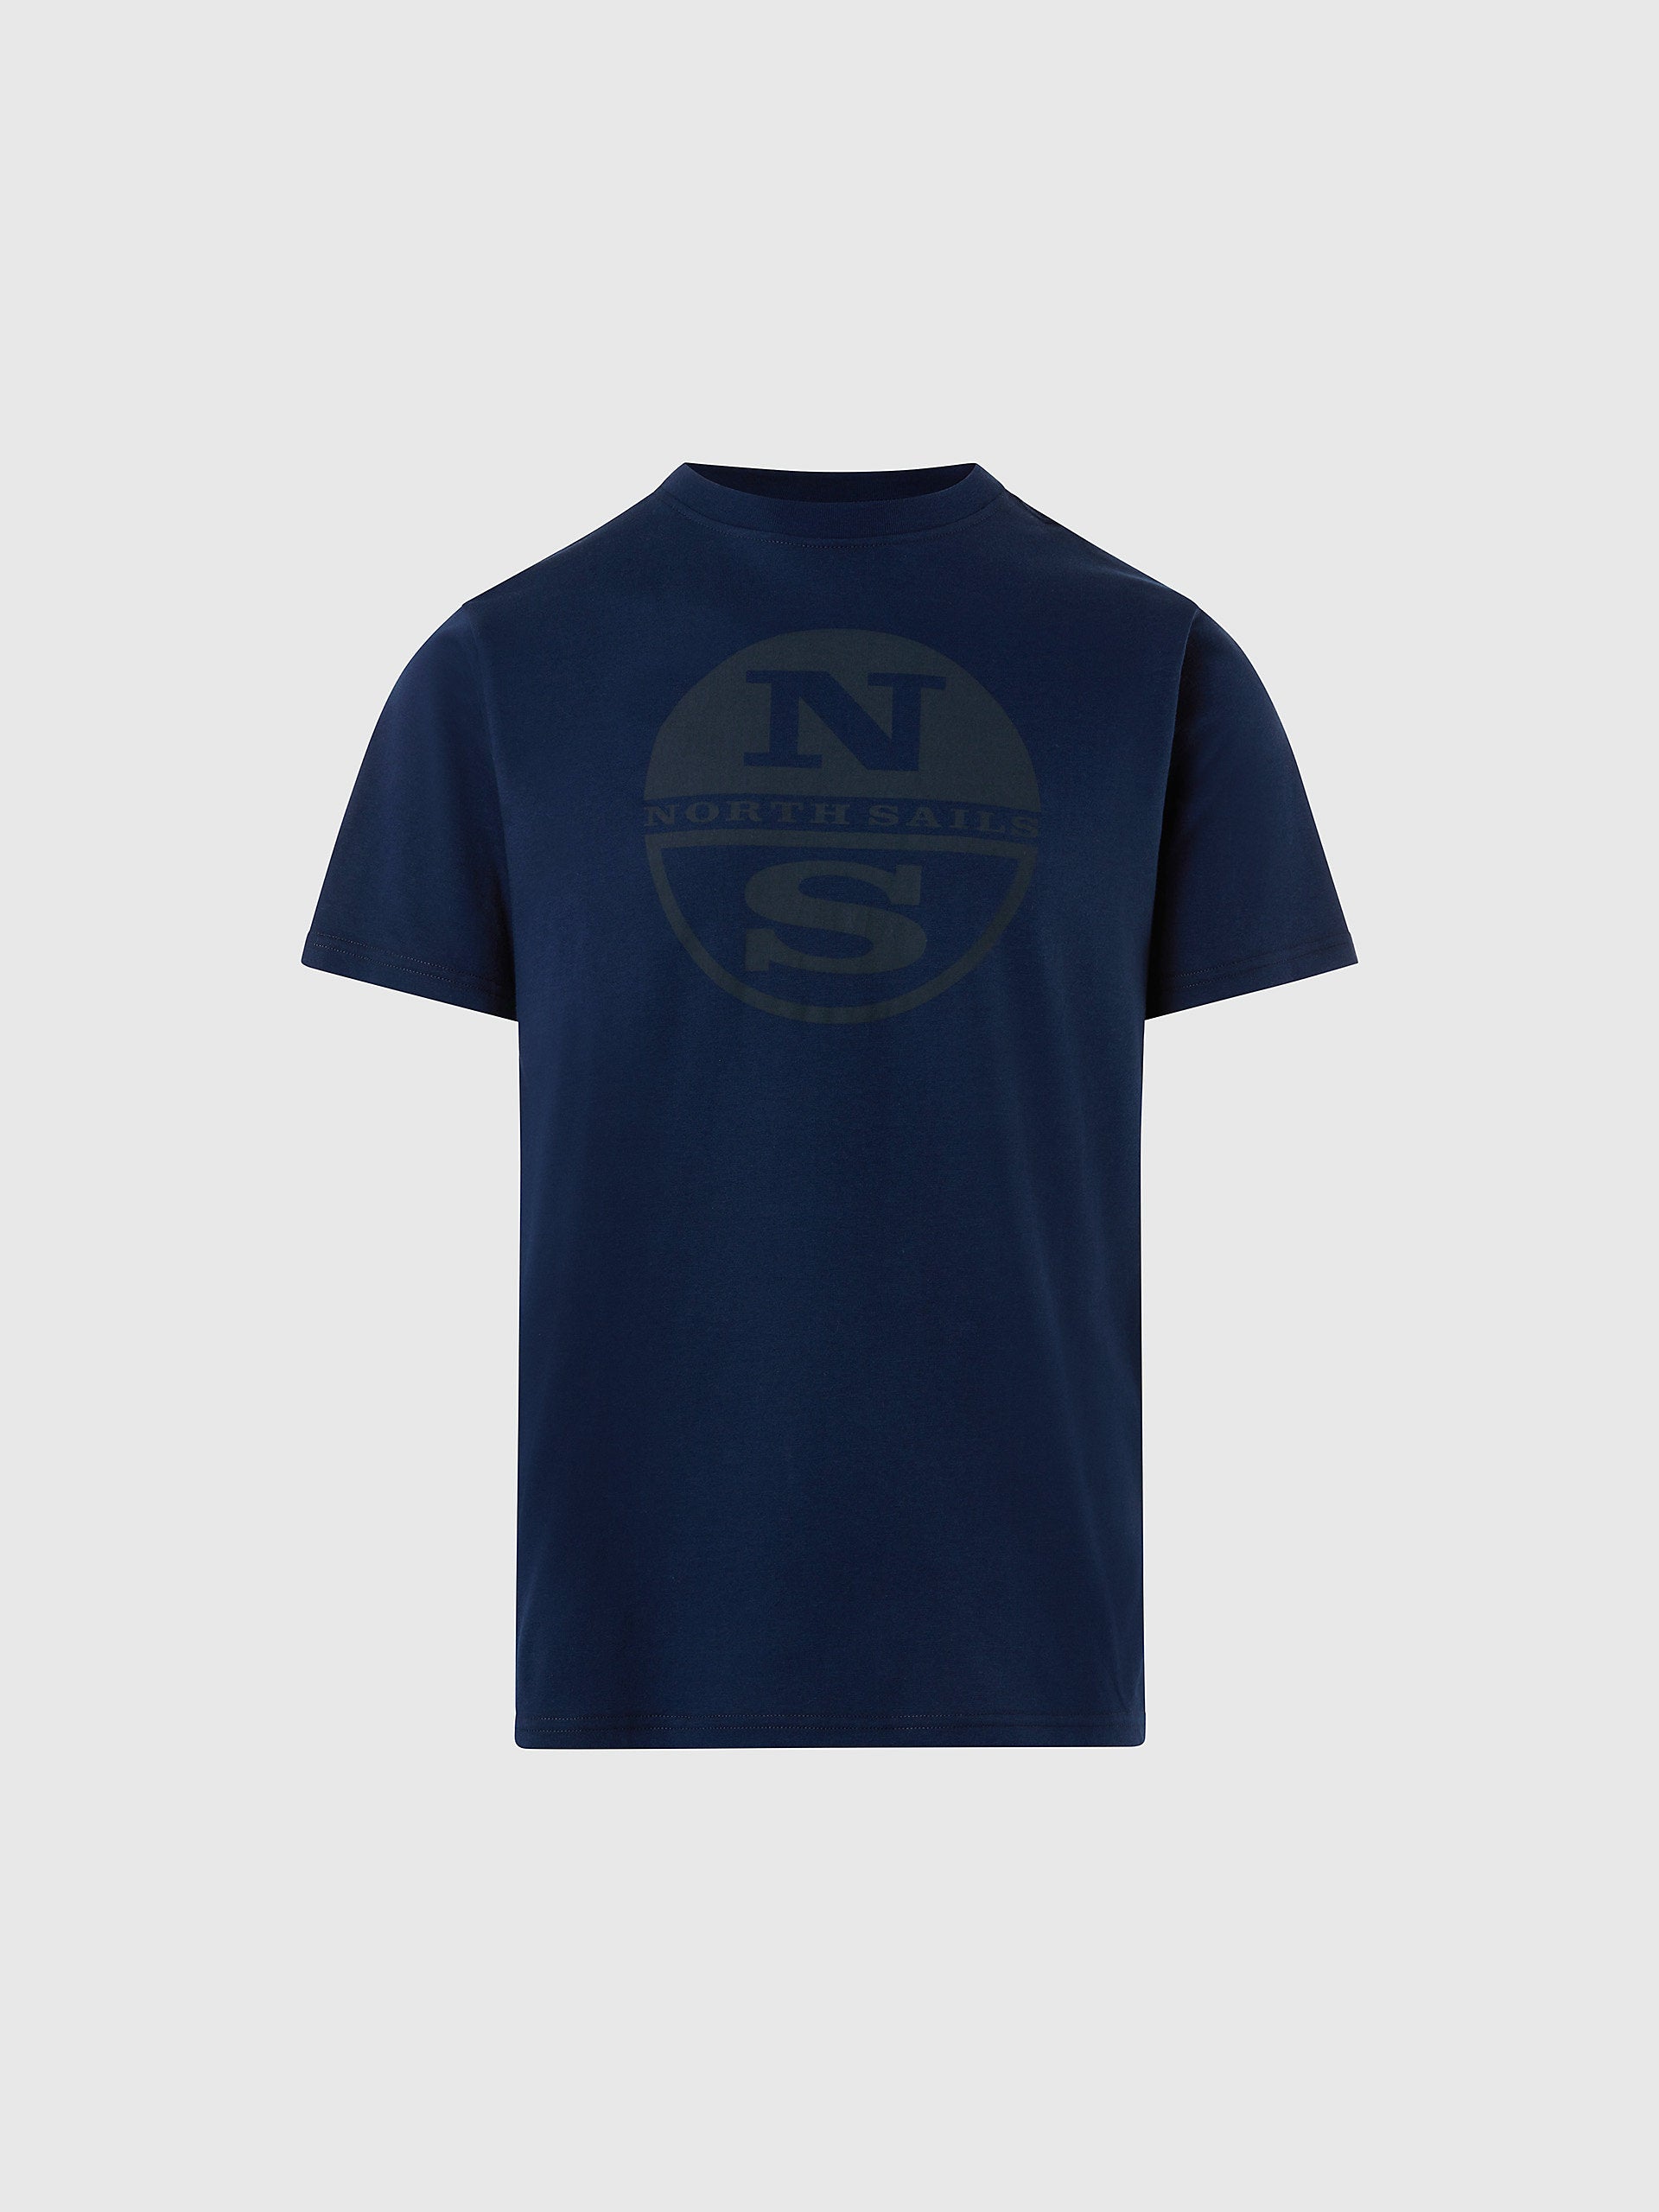 North Sails - T-shirt with logo printNorth SailsNavy blueS